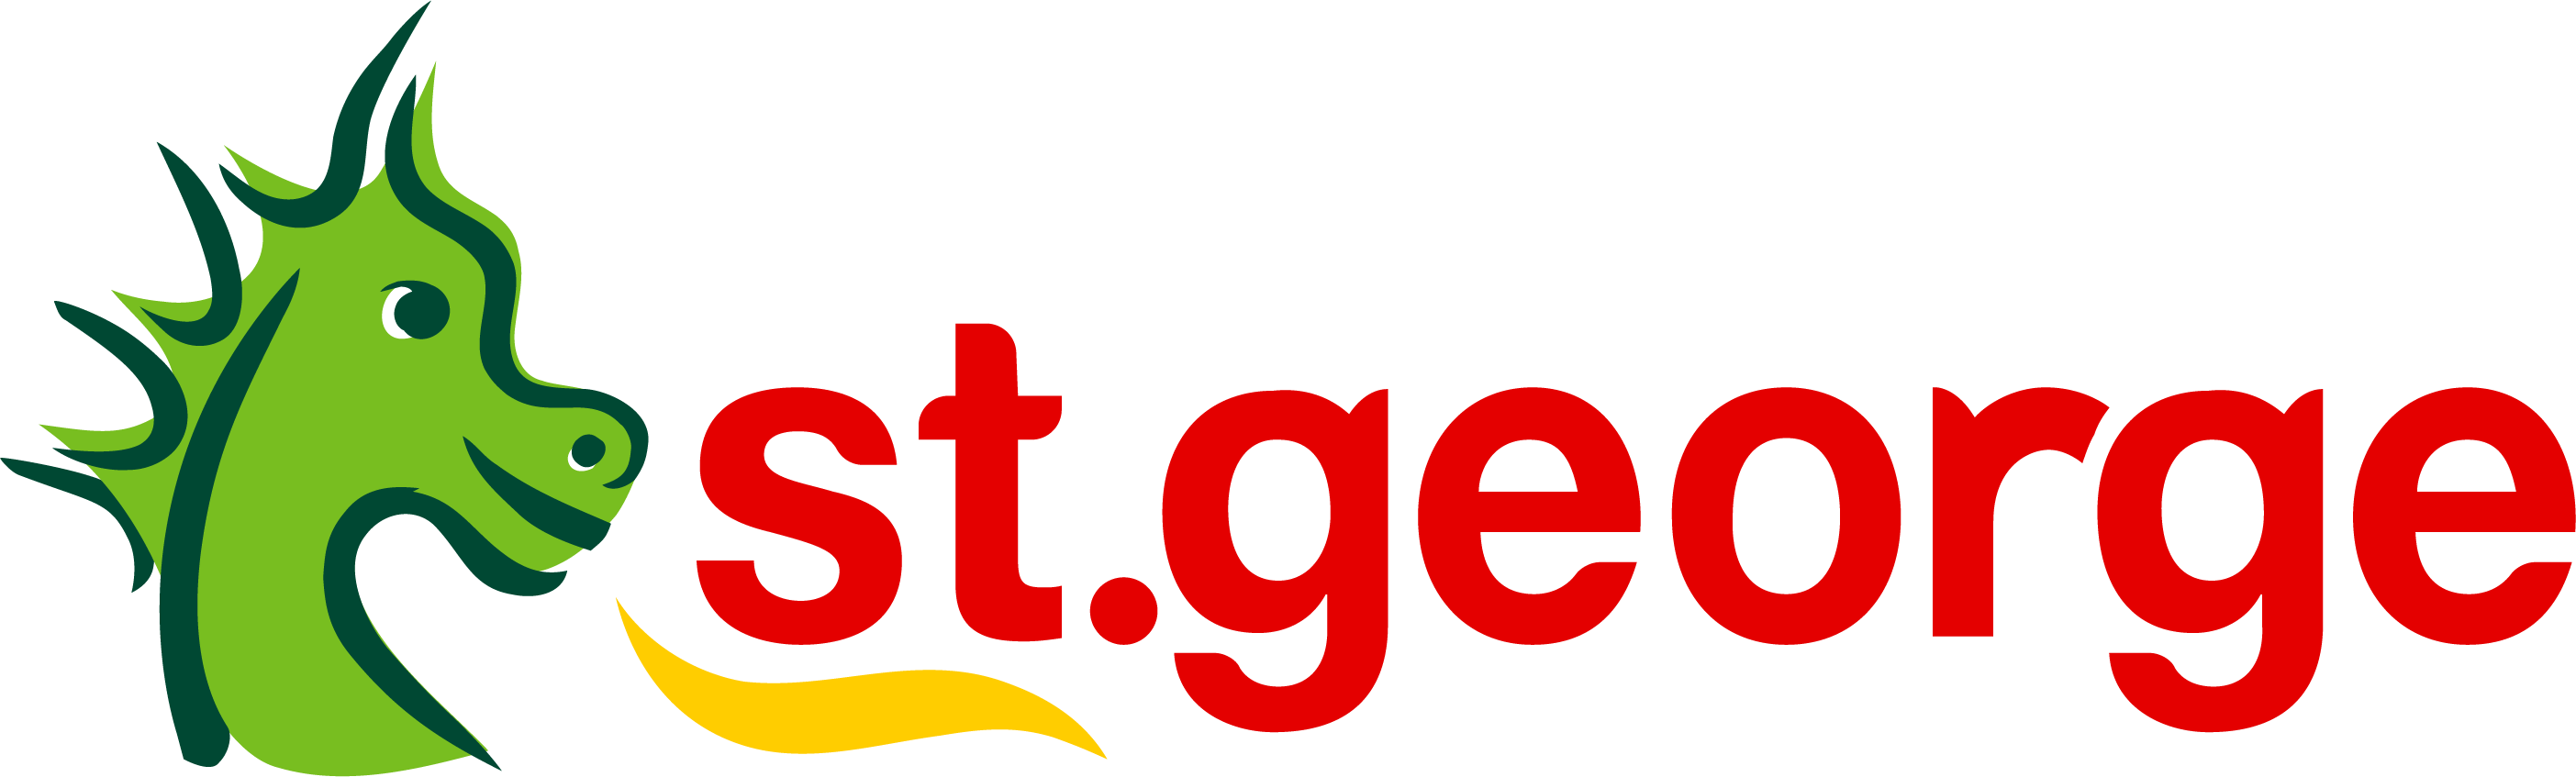 St.George Logo   Bank png